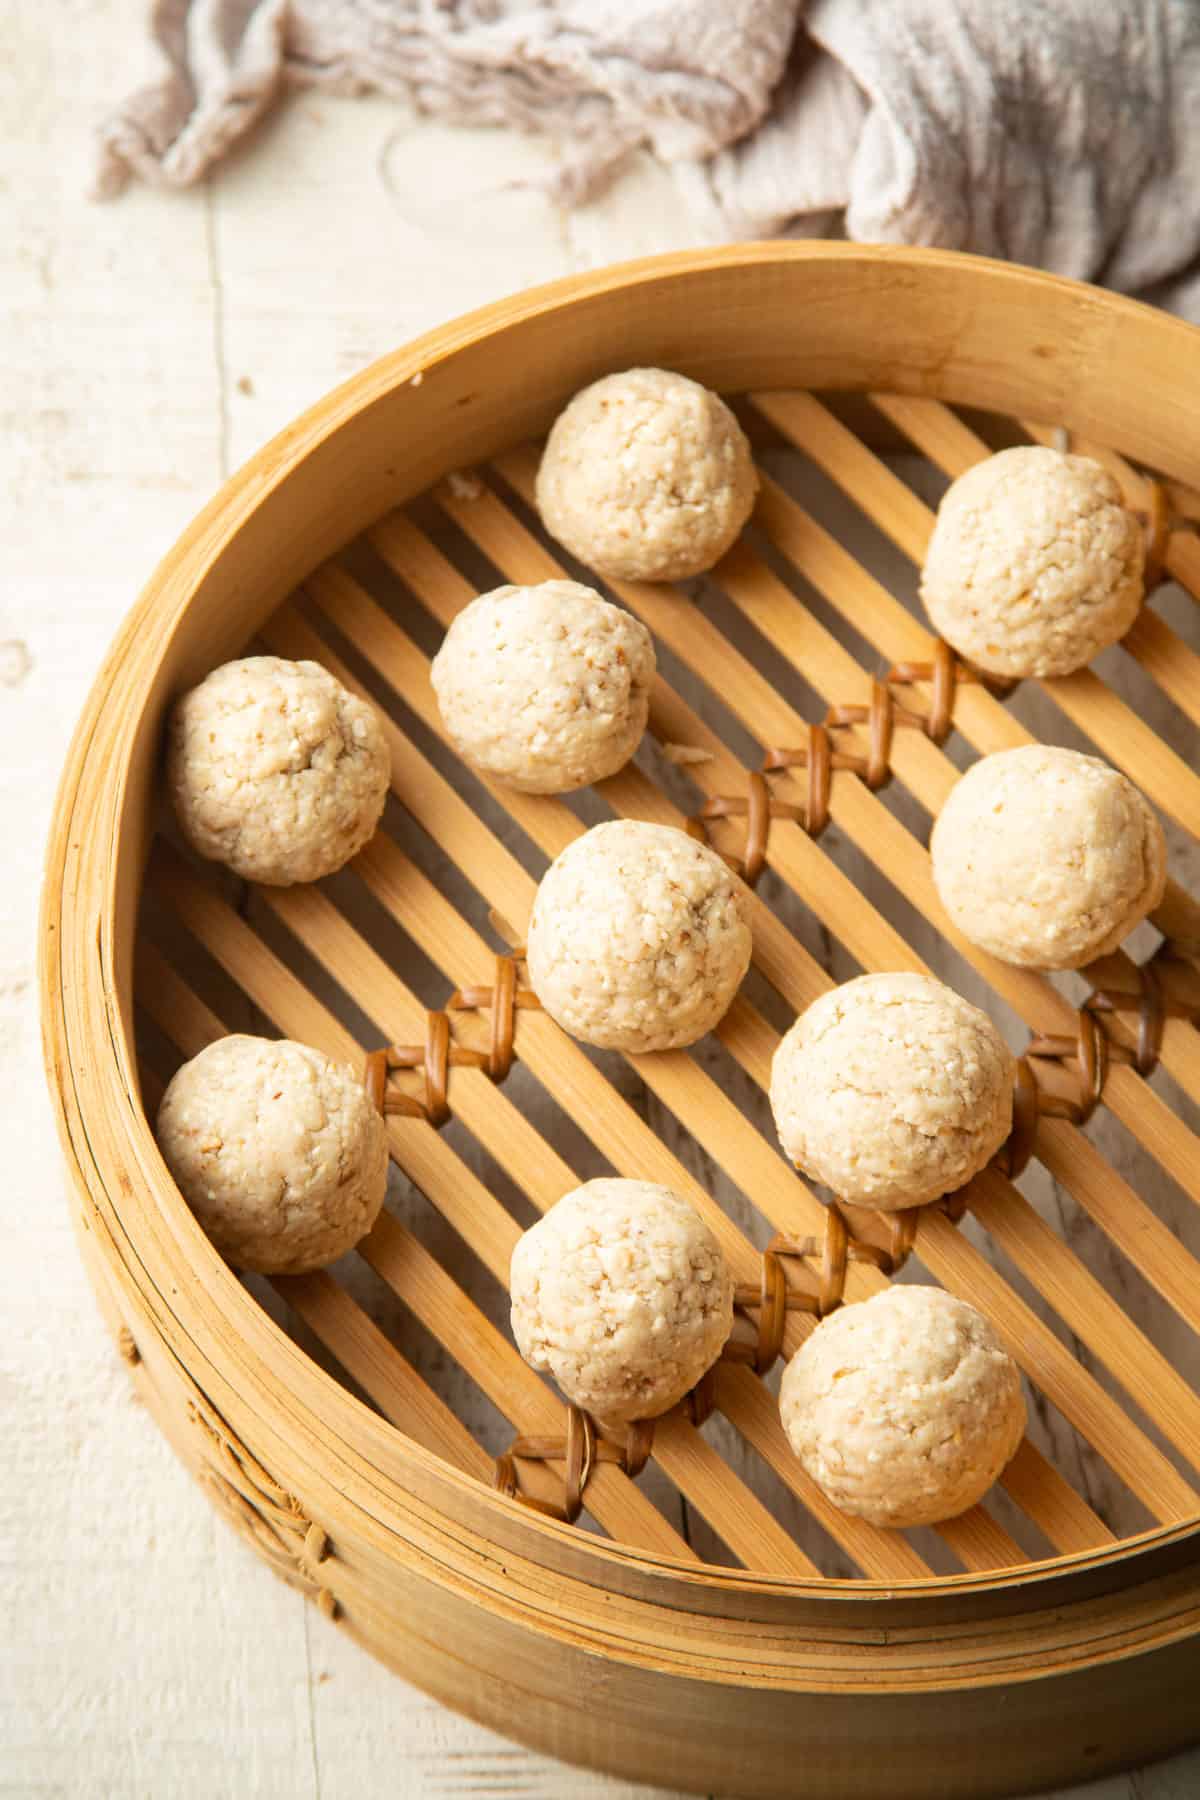 Uncooked vegan matzo balls in a bamboo steamer.